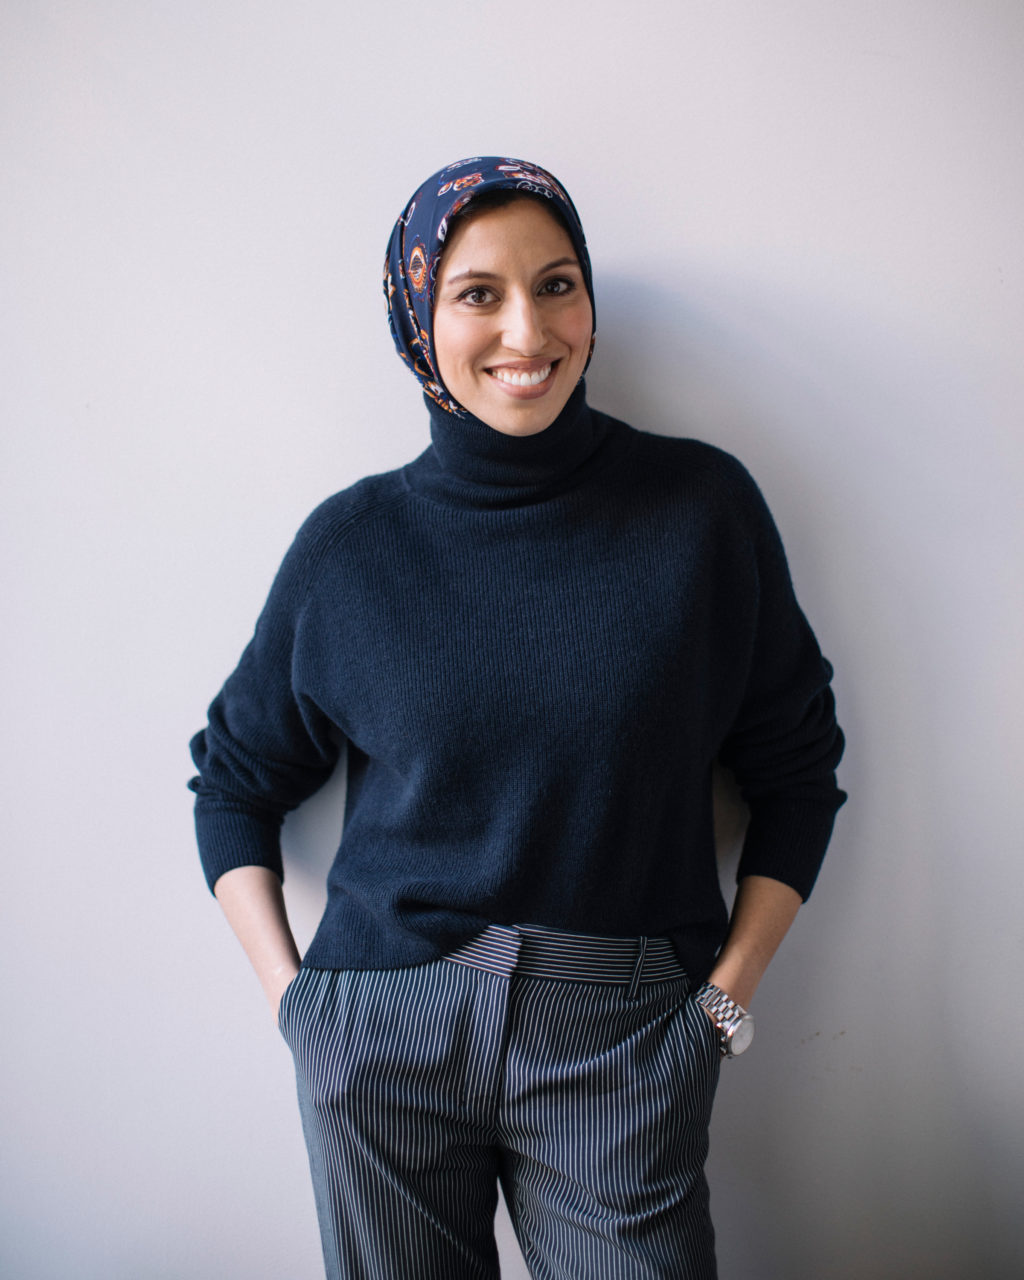 Haute Hijab founder Melanie Elturk